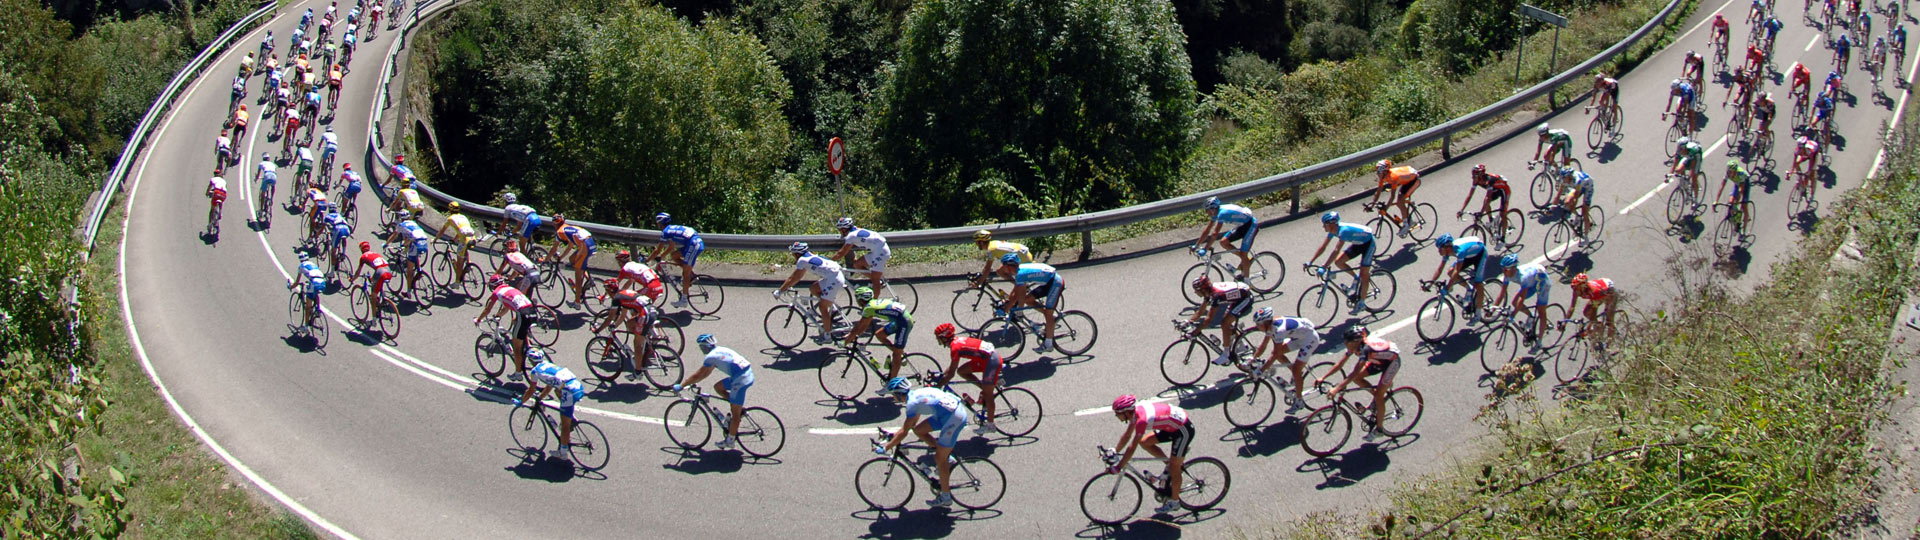 Vuelta Ciclista cycle race around Spain